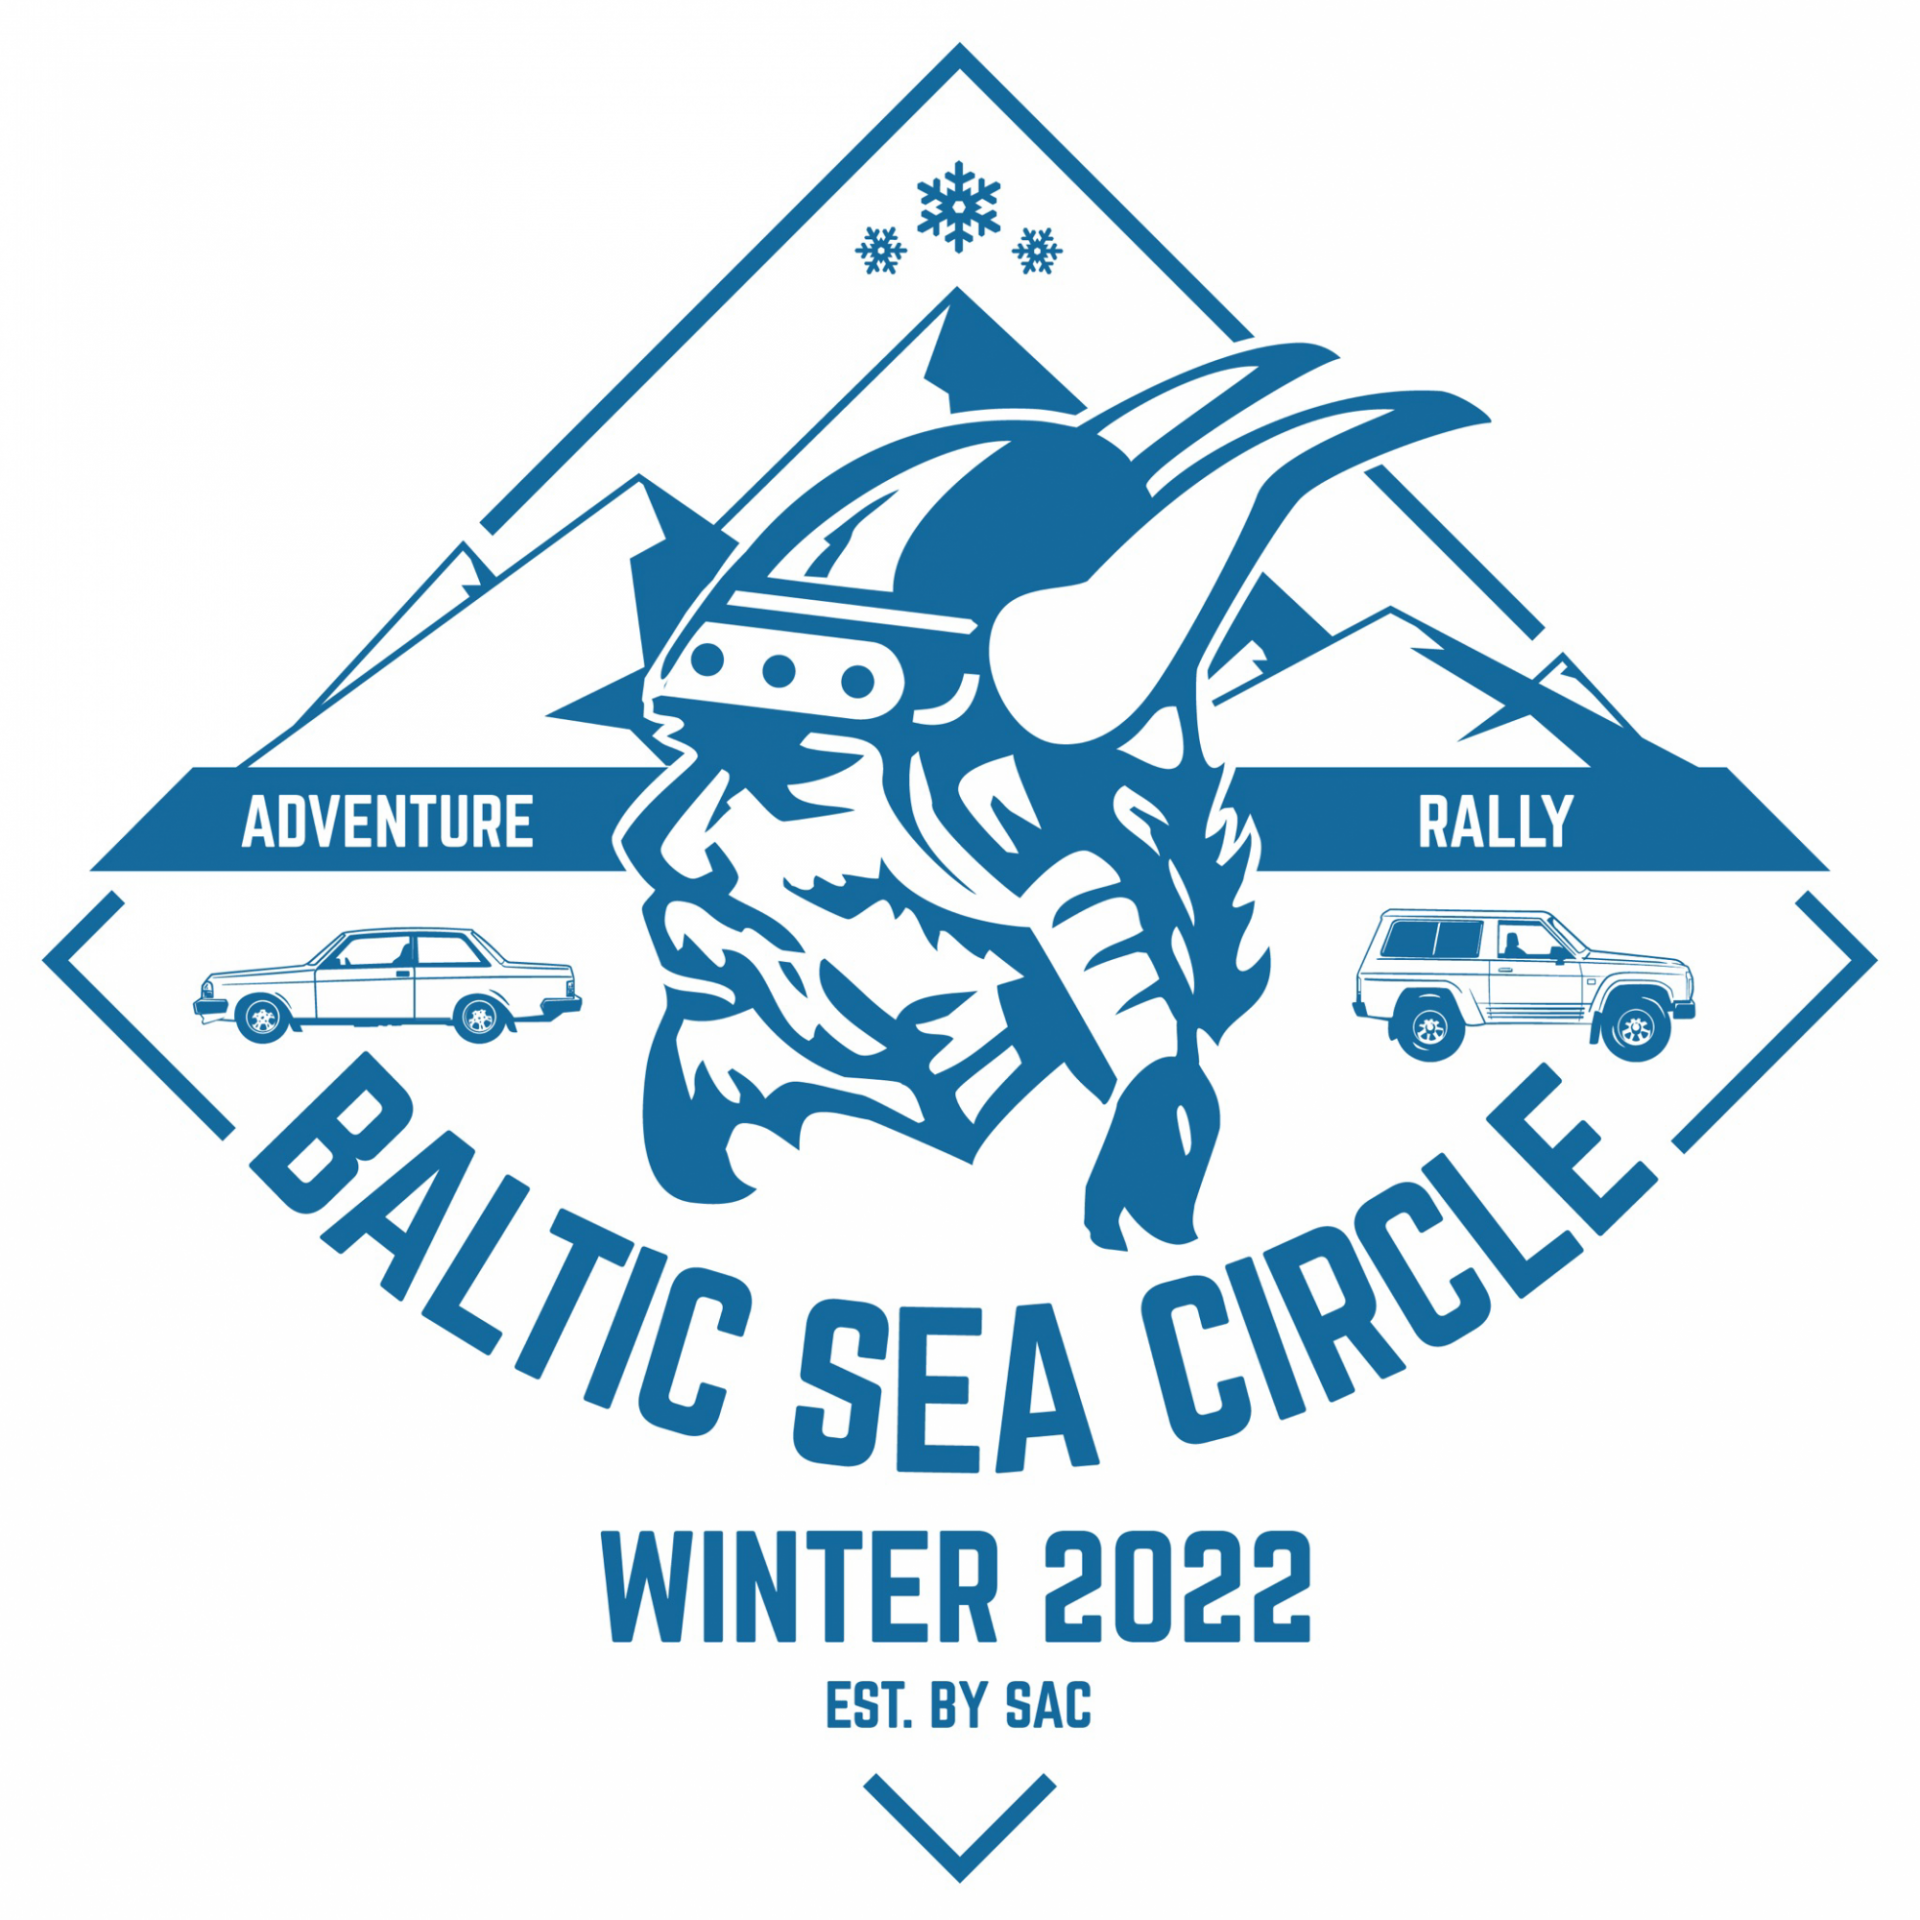 Baltic sea circle